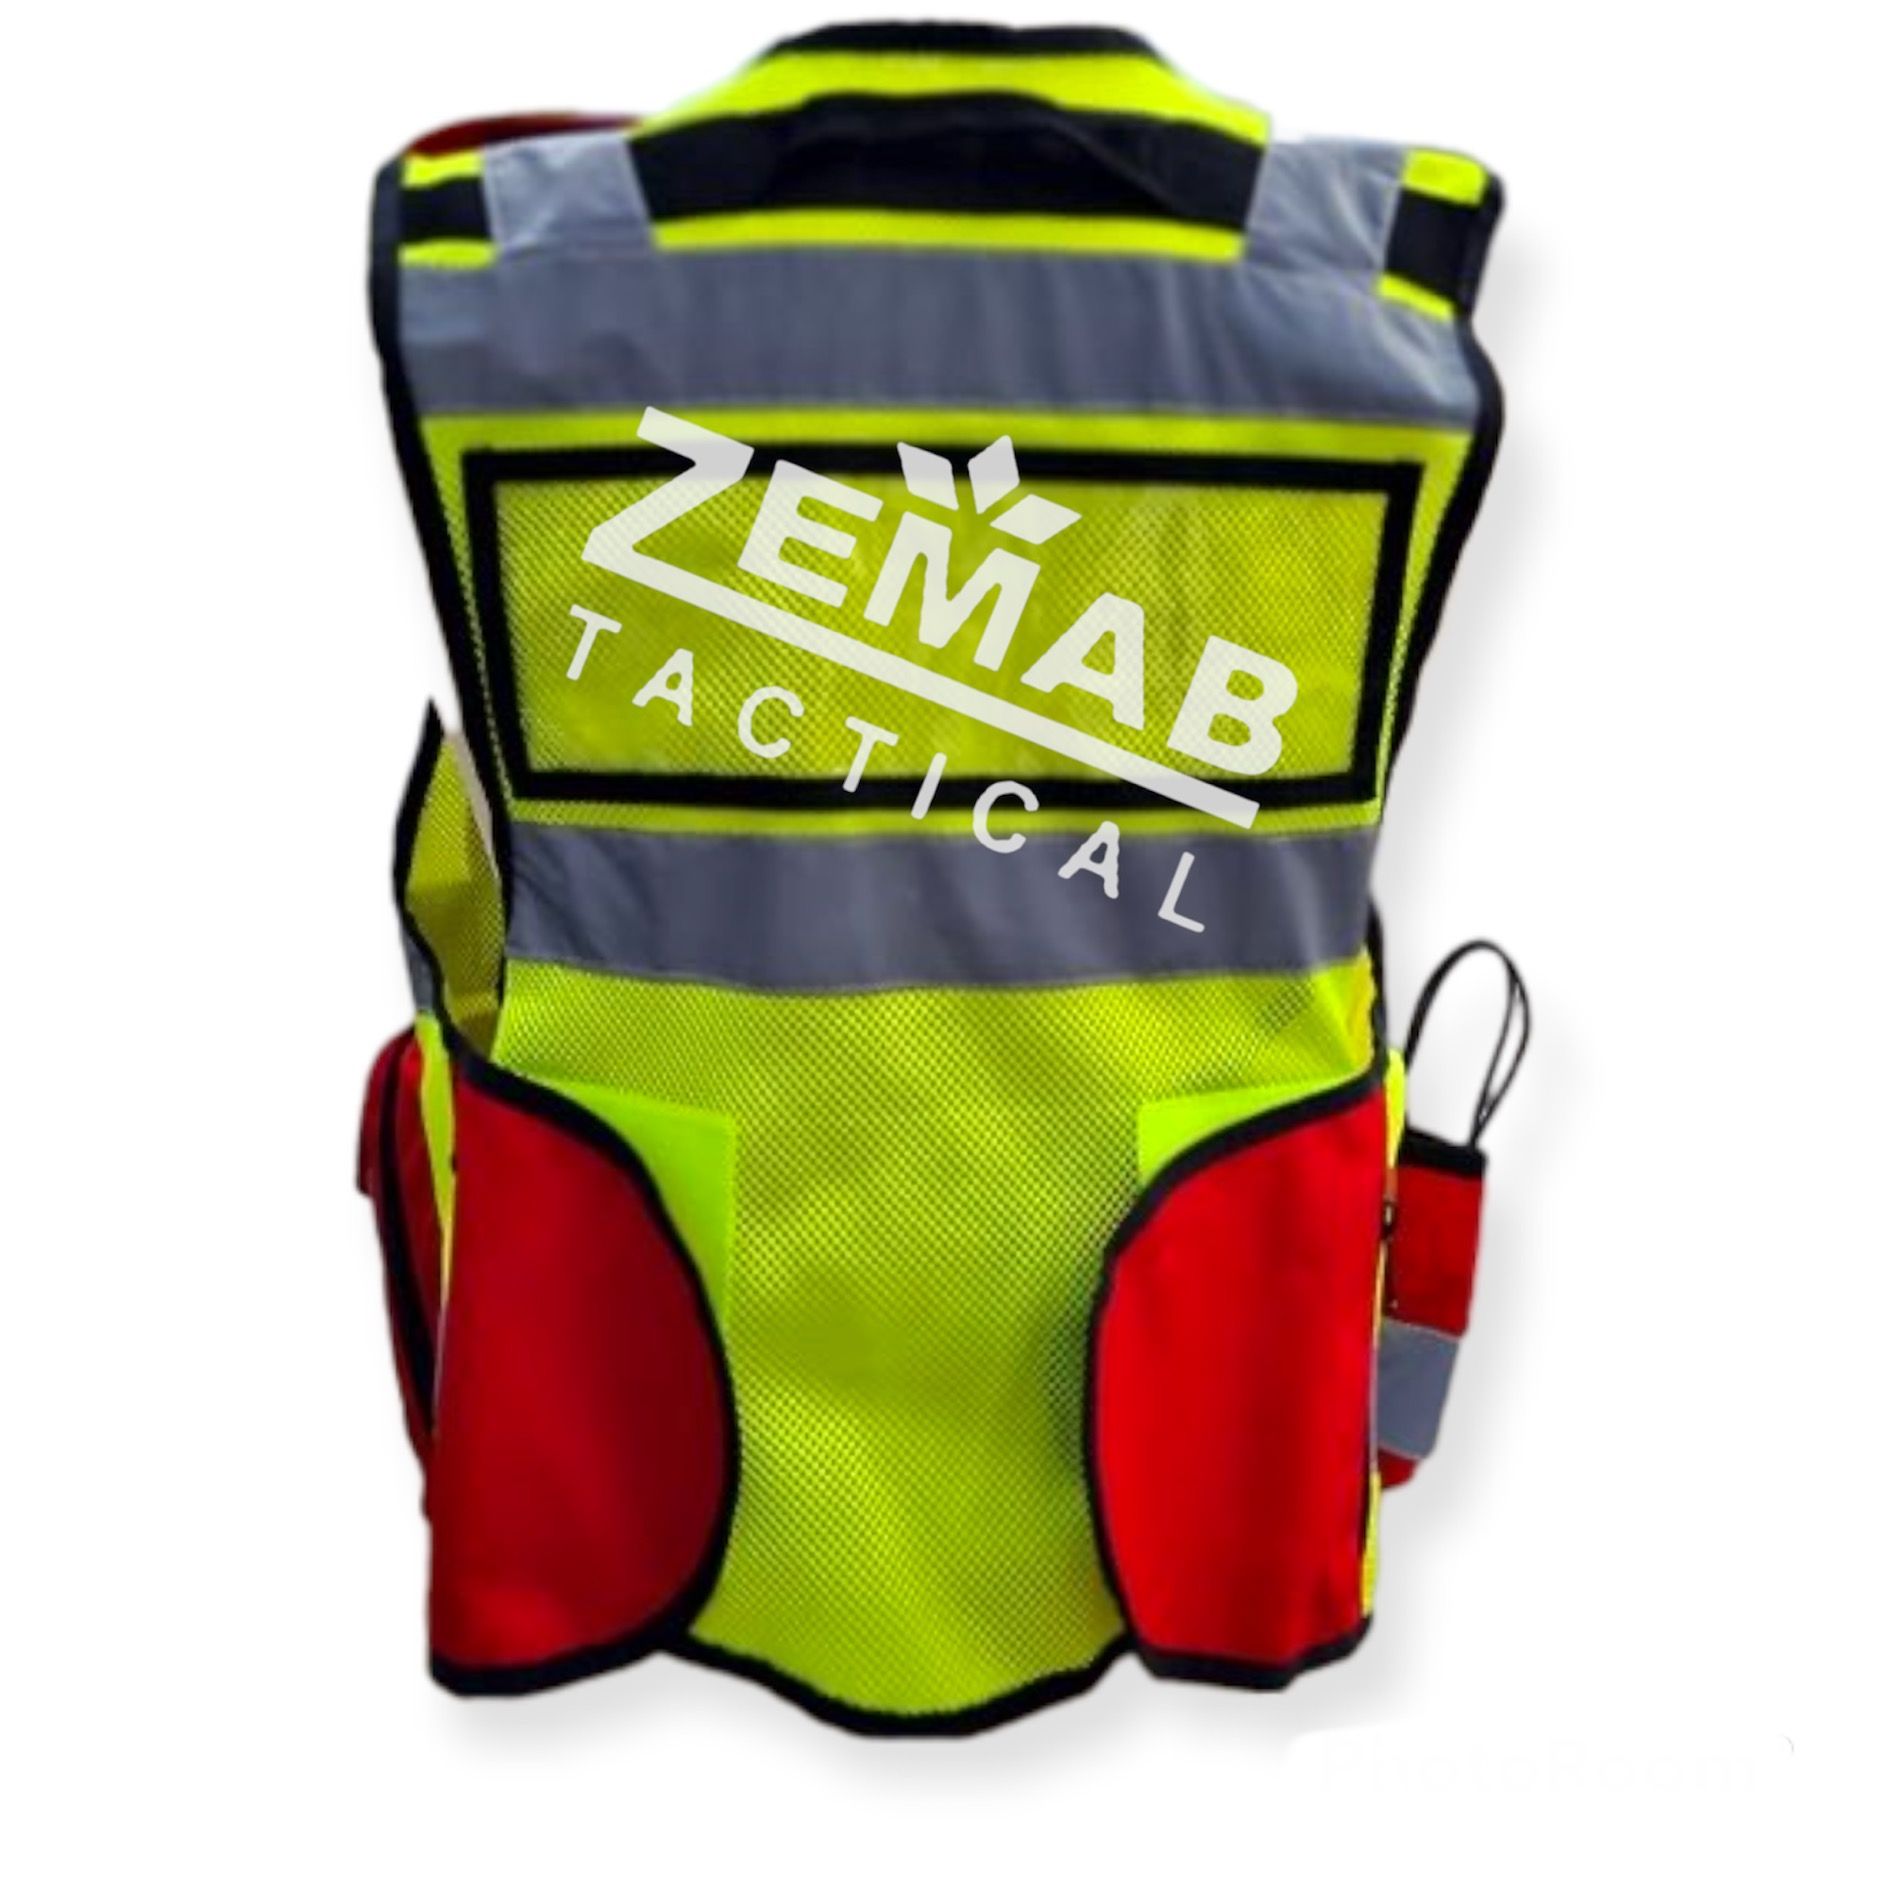 ZEMAB EMS AMBULANCE AND FIRE VEST